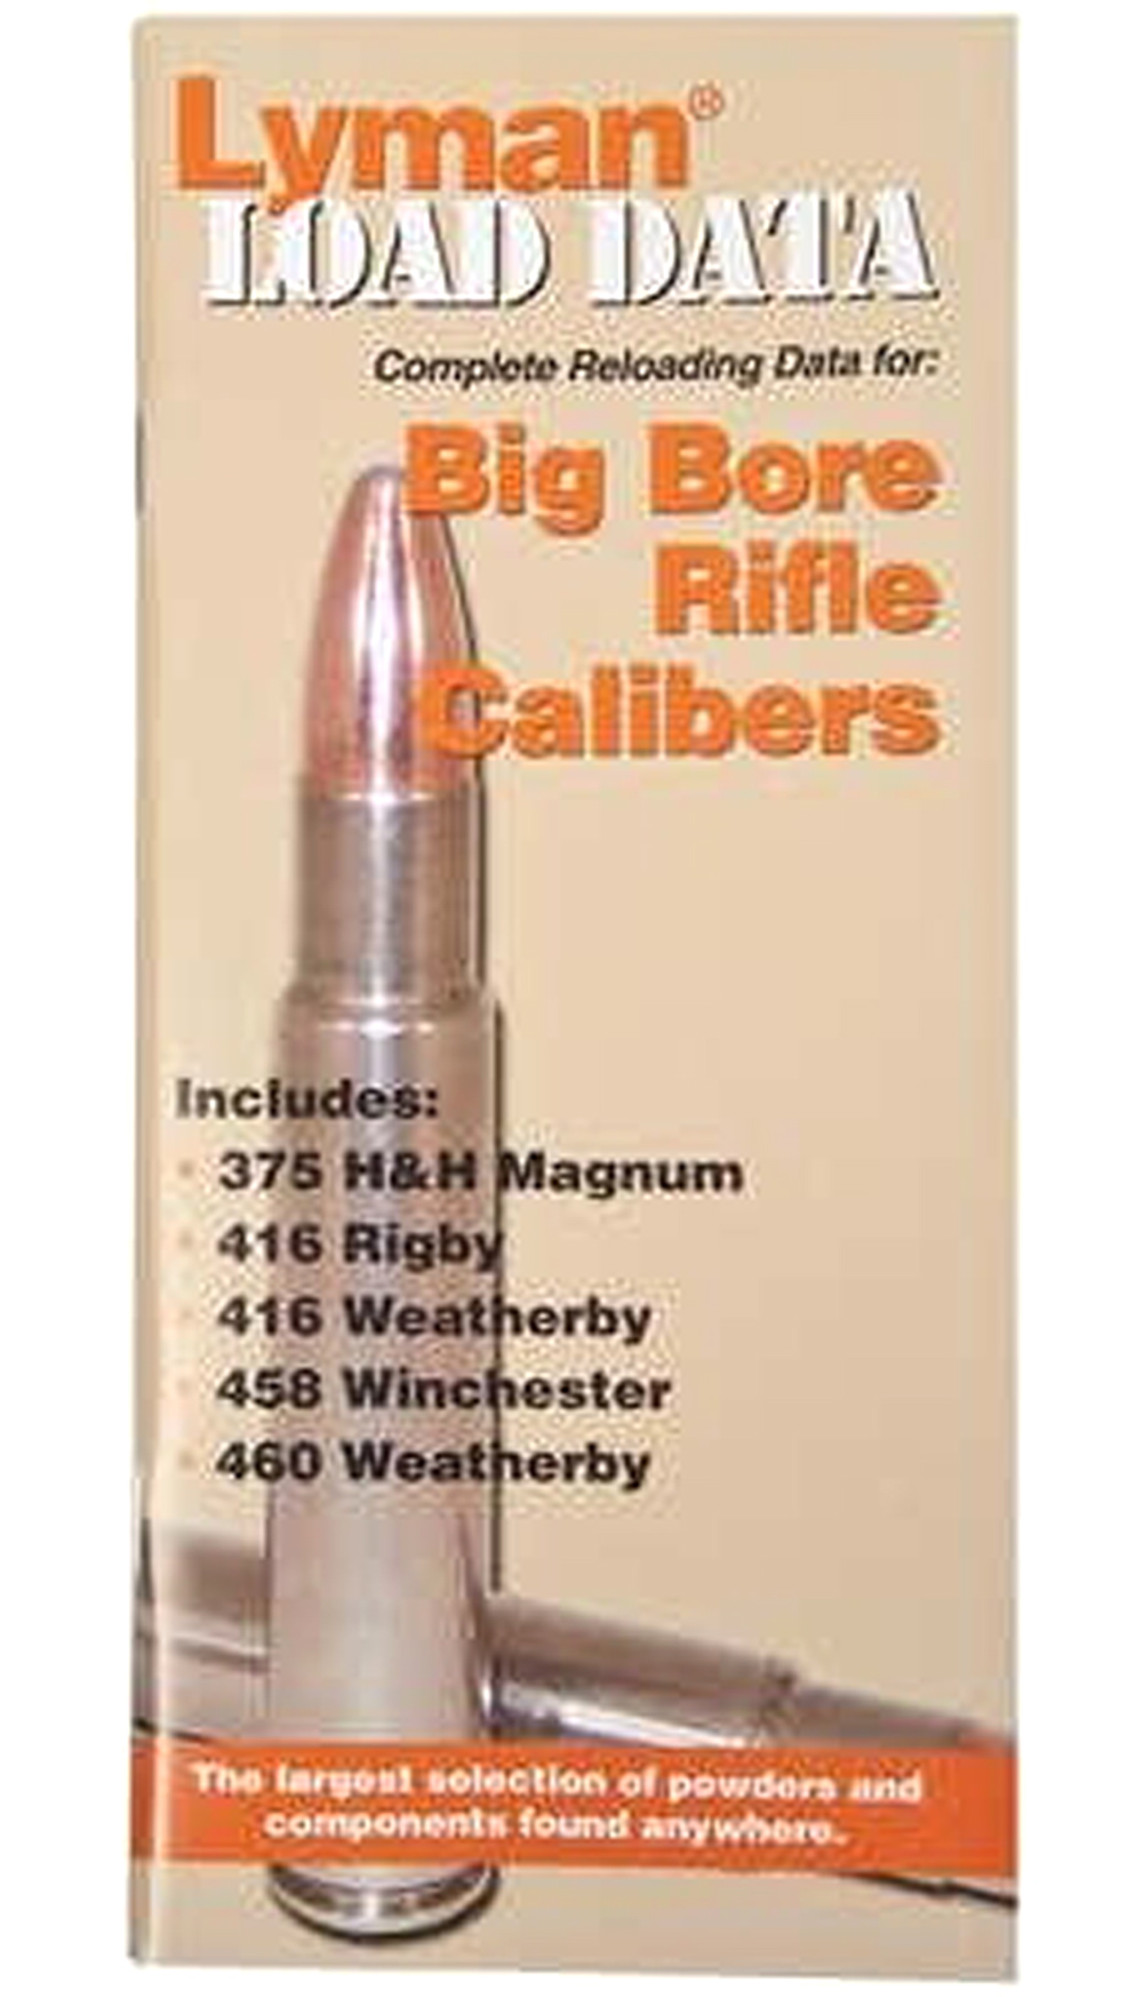 Load Data Book Big Bore Rifle Calibers